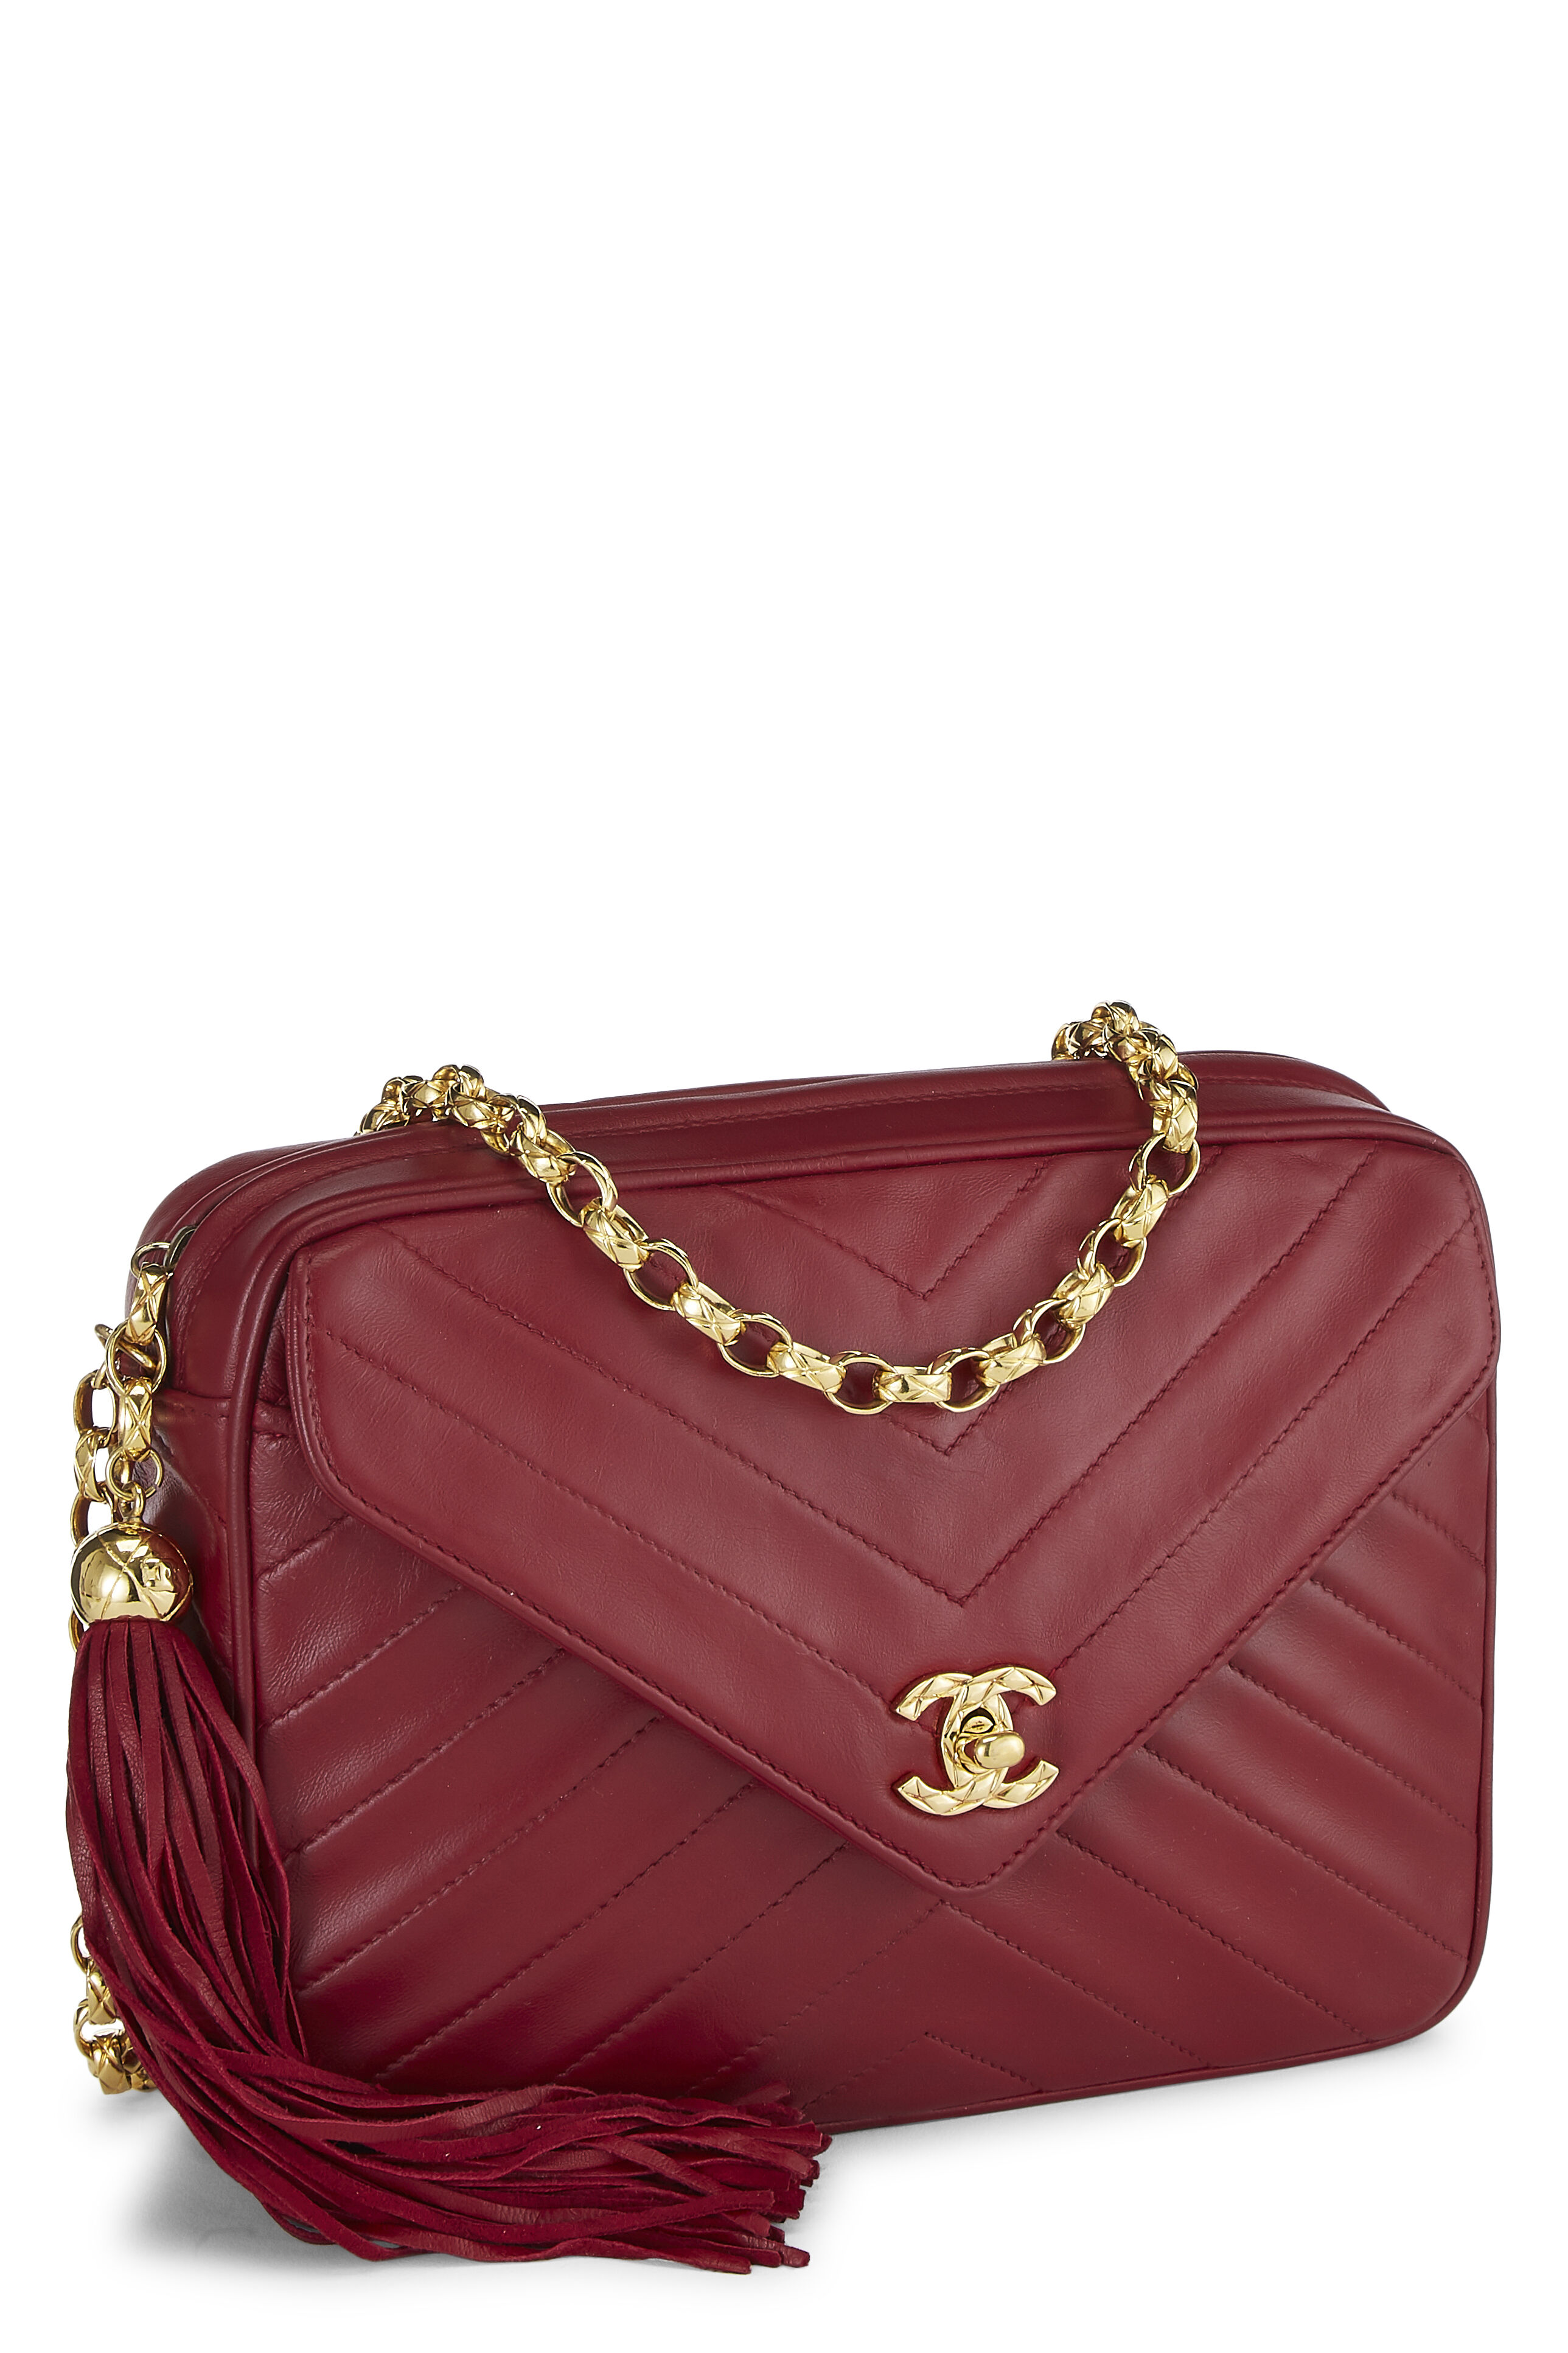 Shop Vintage Chanel Bags | Pre-Owned Chanel Bag | WGACA